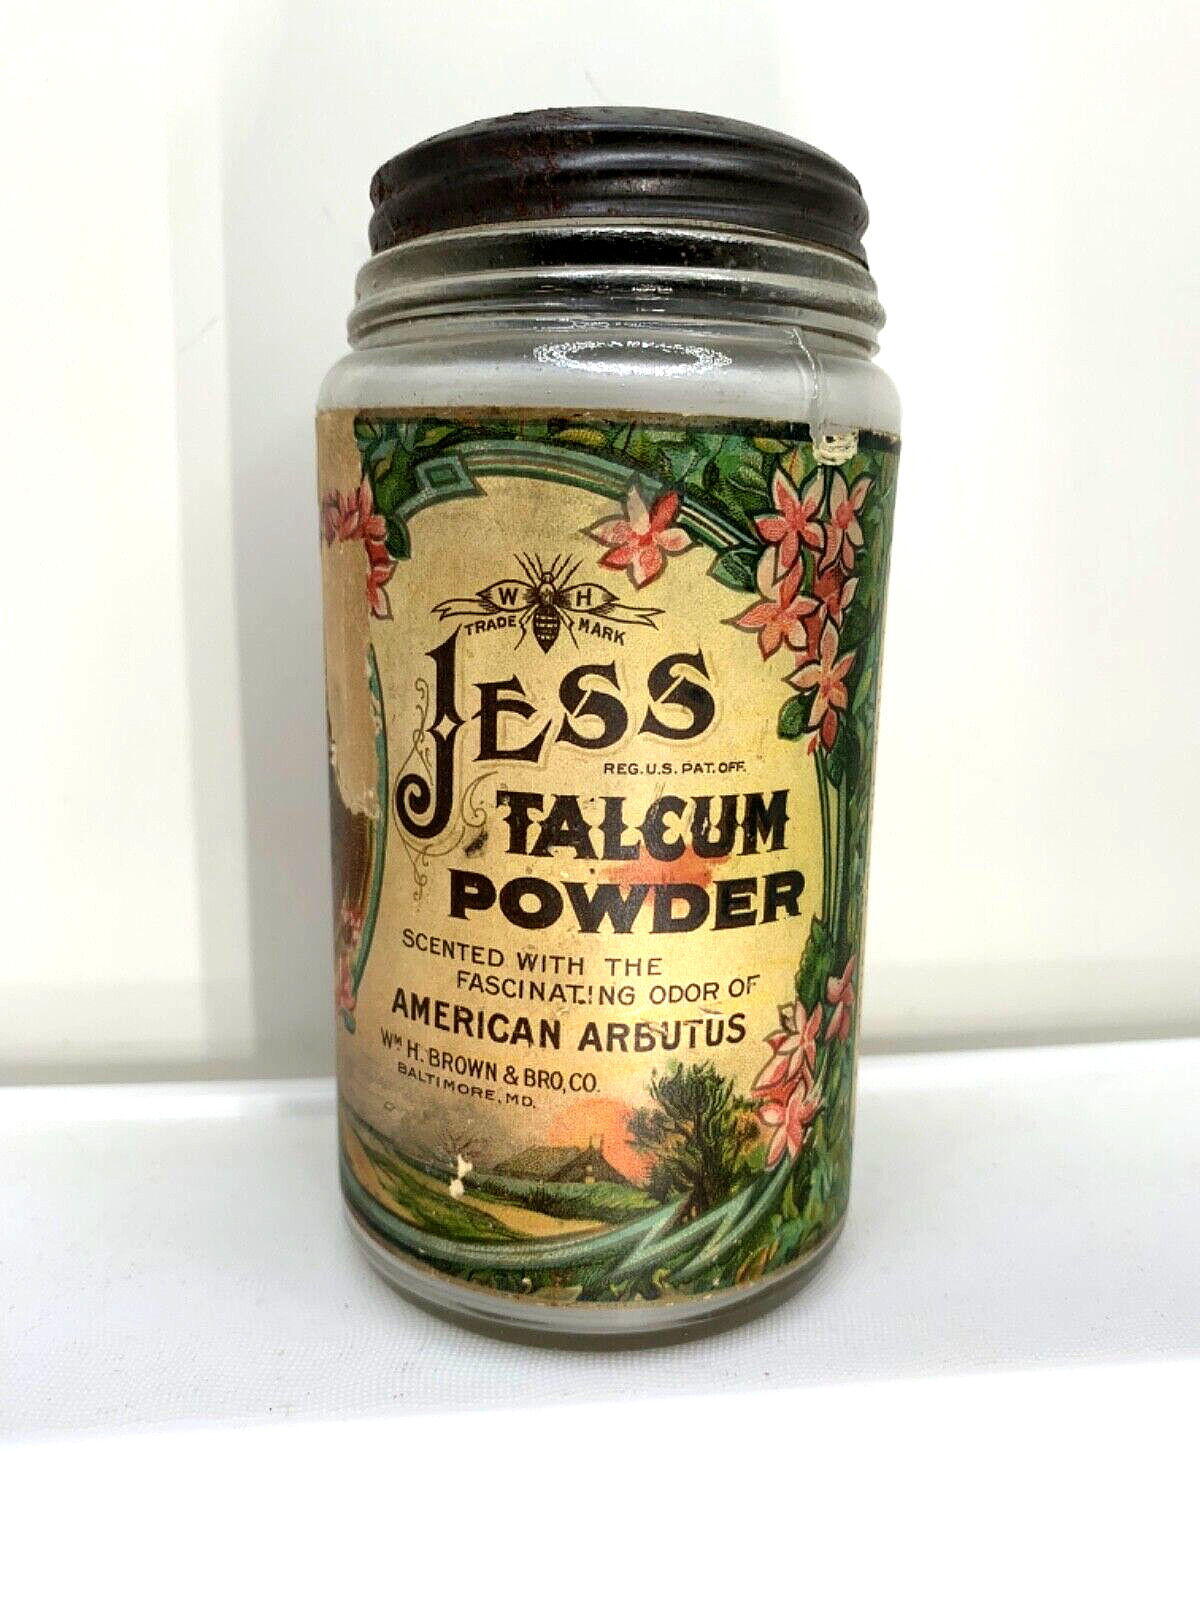 Lovely Antique powder jar.  Jess, American Arbitus by HM Brown & Bro, Co.  1900